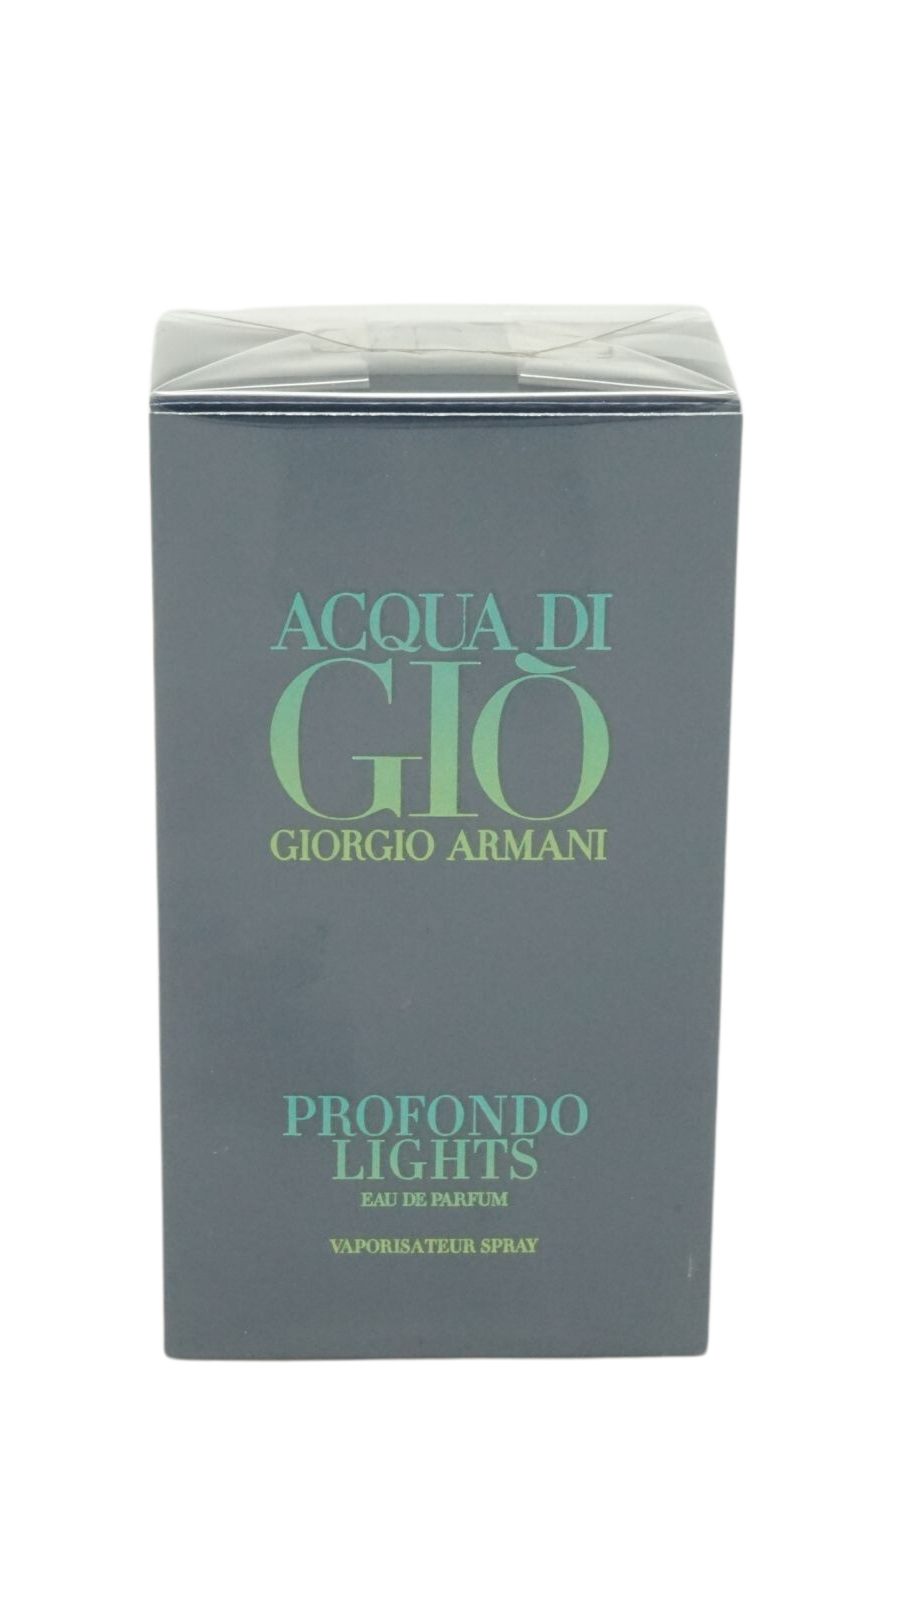 de Giorgio di Acqua Toilette Armani Eau Armani parfum Eau Gio 40ml Profondo Giorgio de Lights